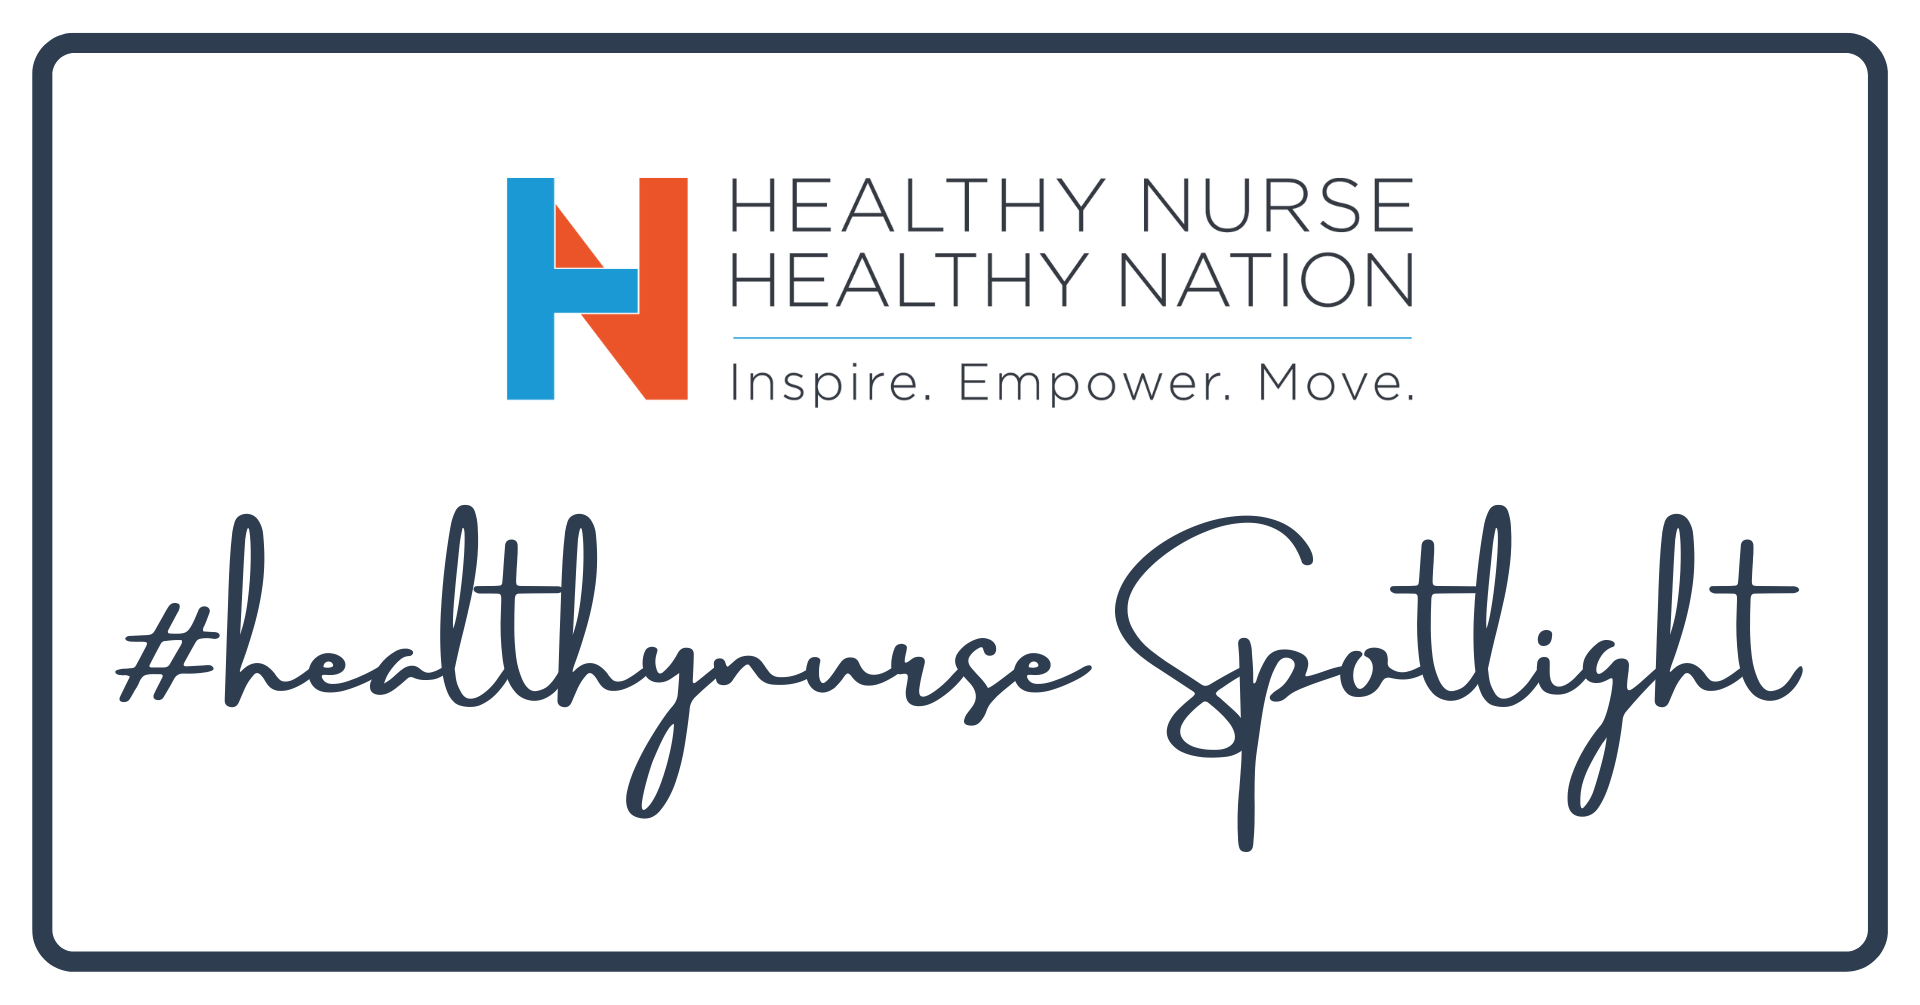 Healthy Nurse, Healthy Nation™ - #healthynurse Spotlight Series - Kimberly La Force, RN 3254